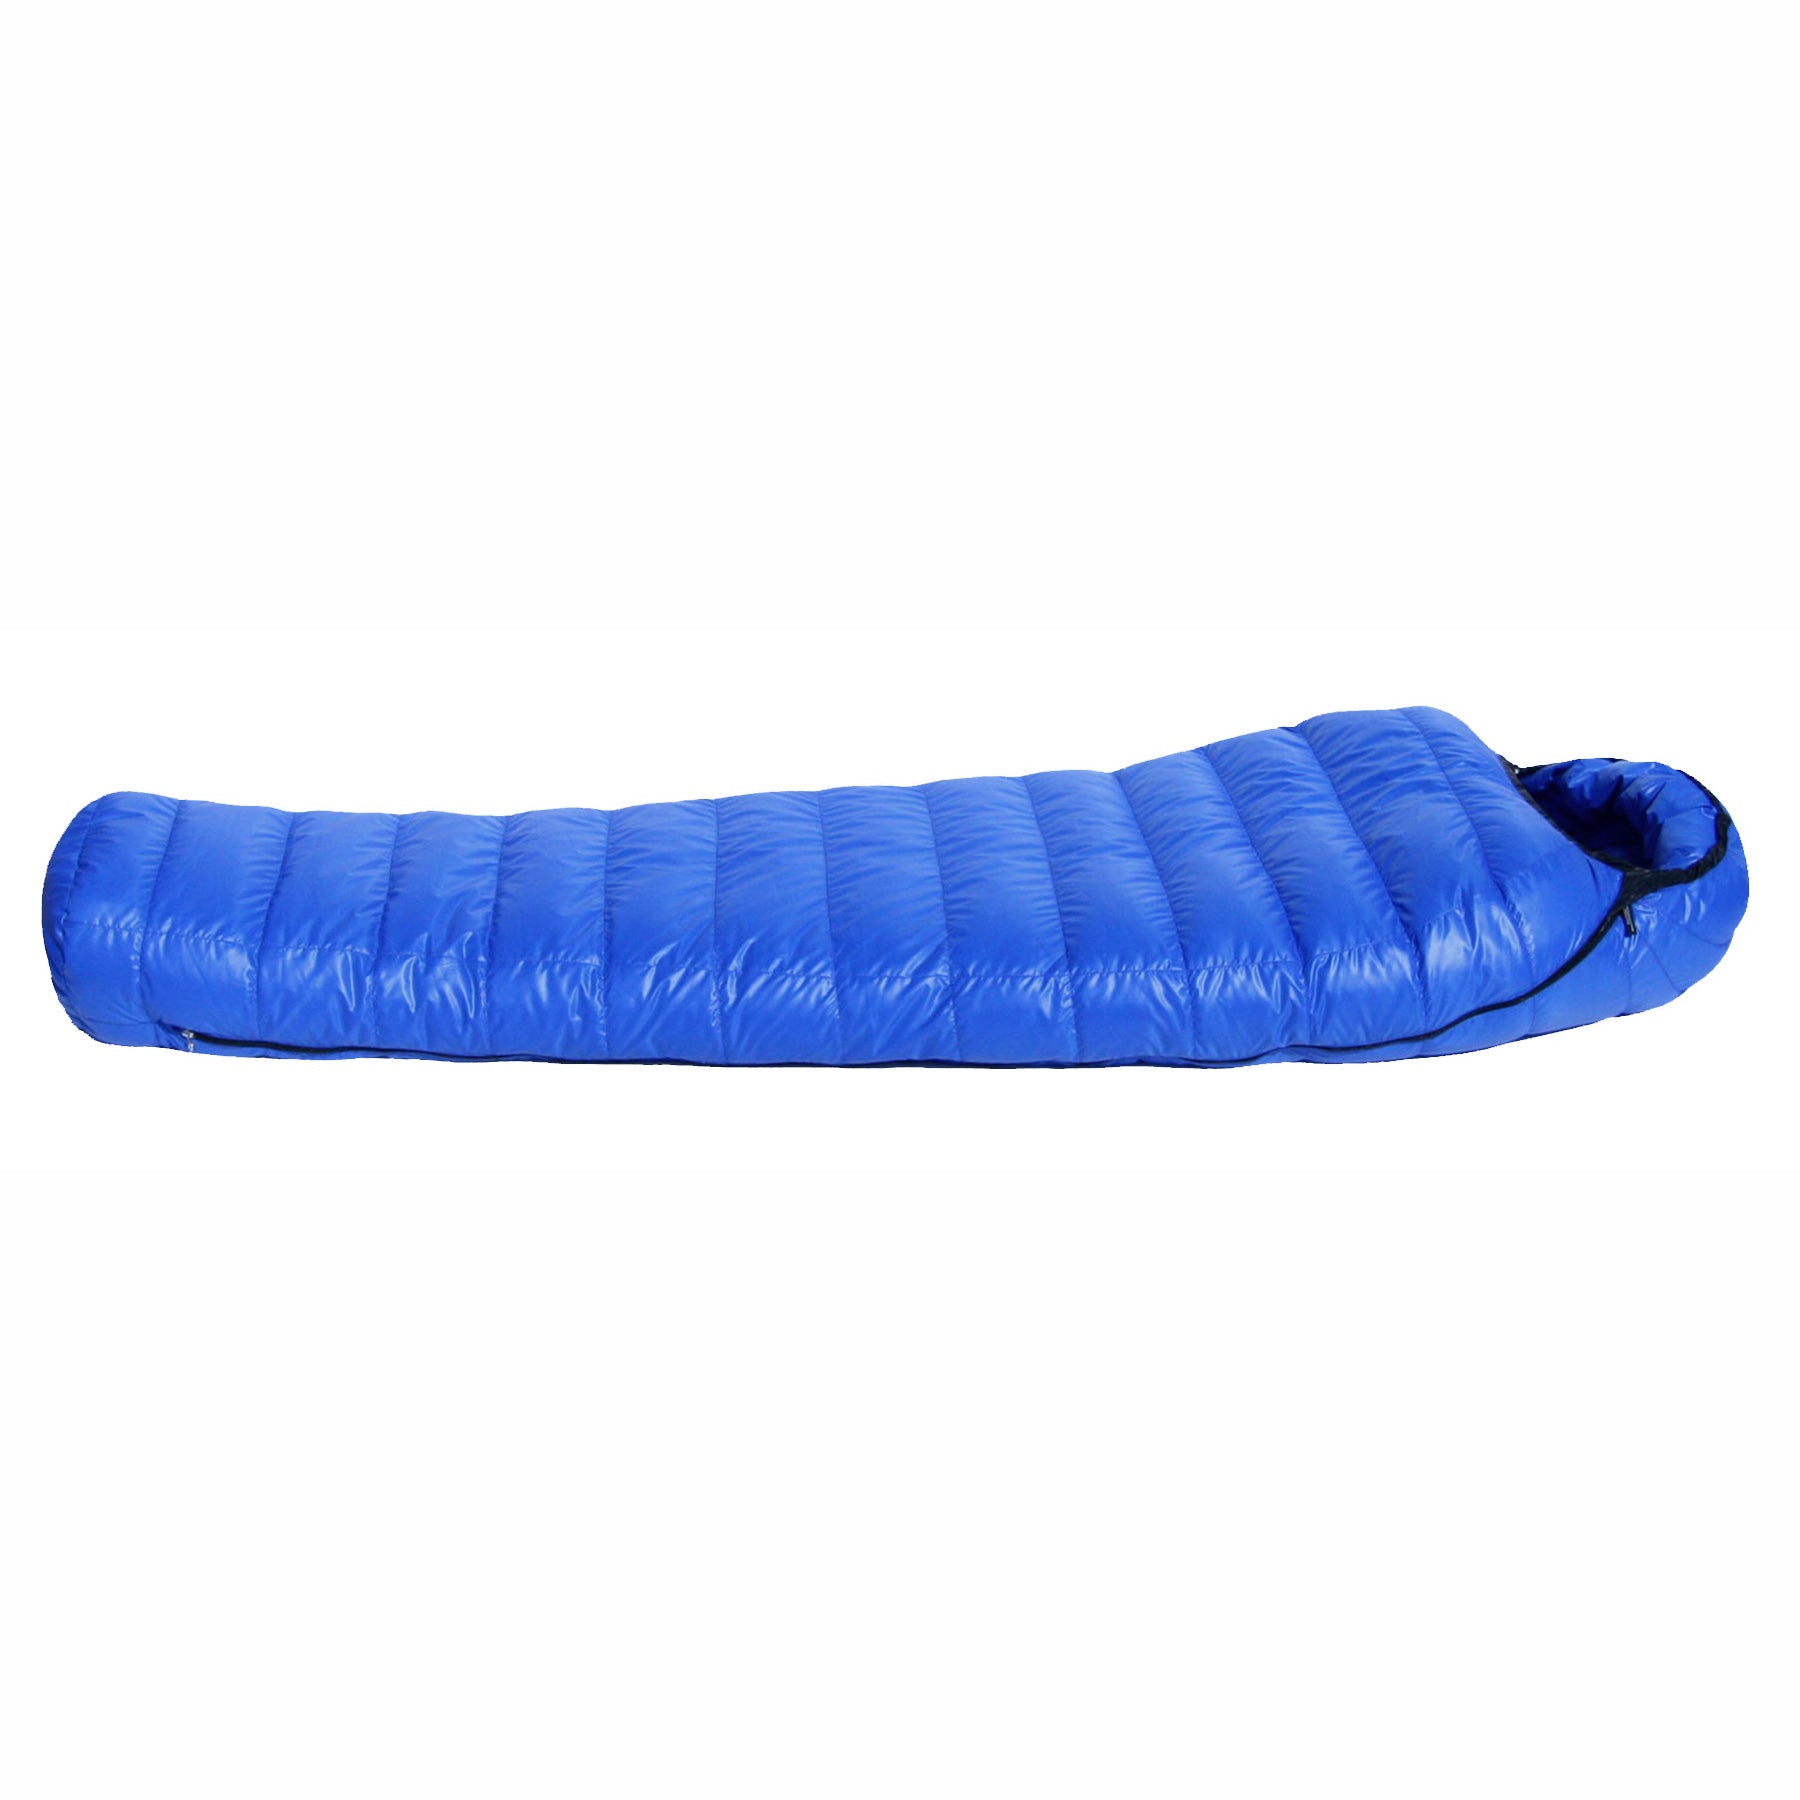 ANTELOPE MF SLEEPING BAG FULLY ZIPPED IN BLUE